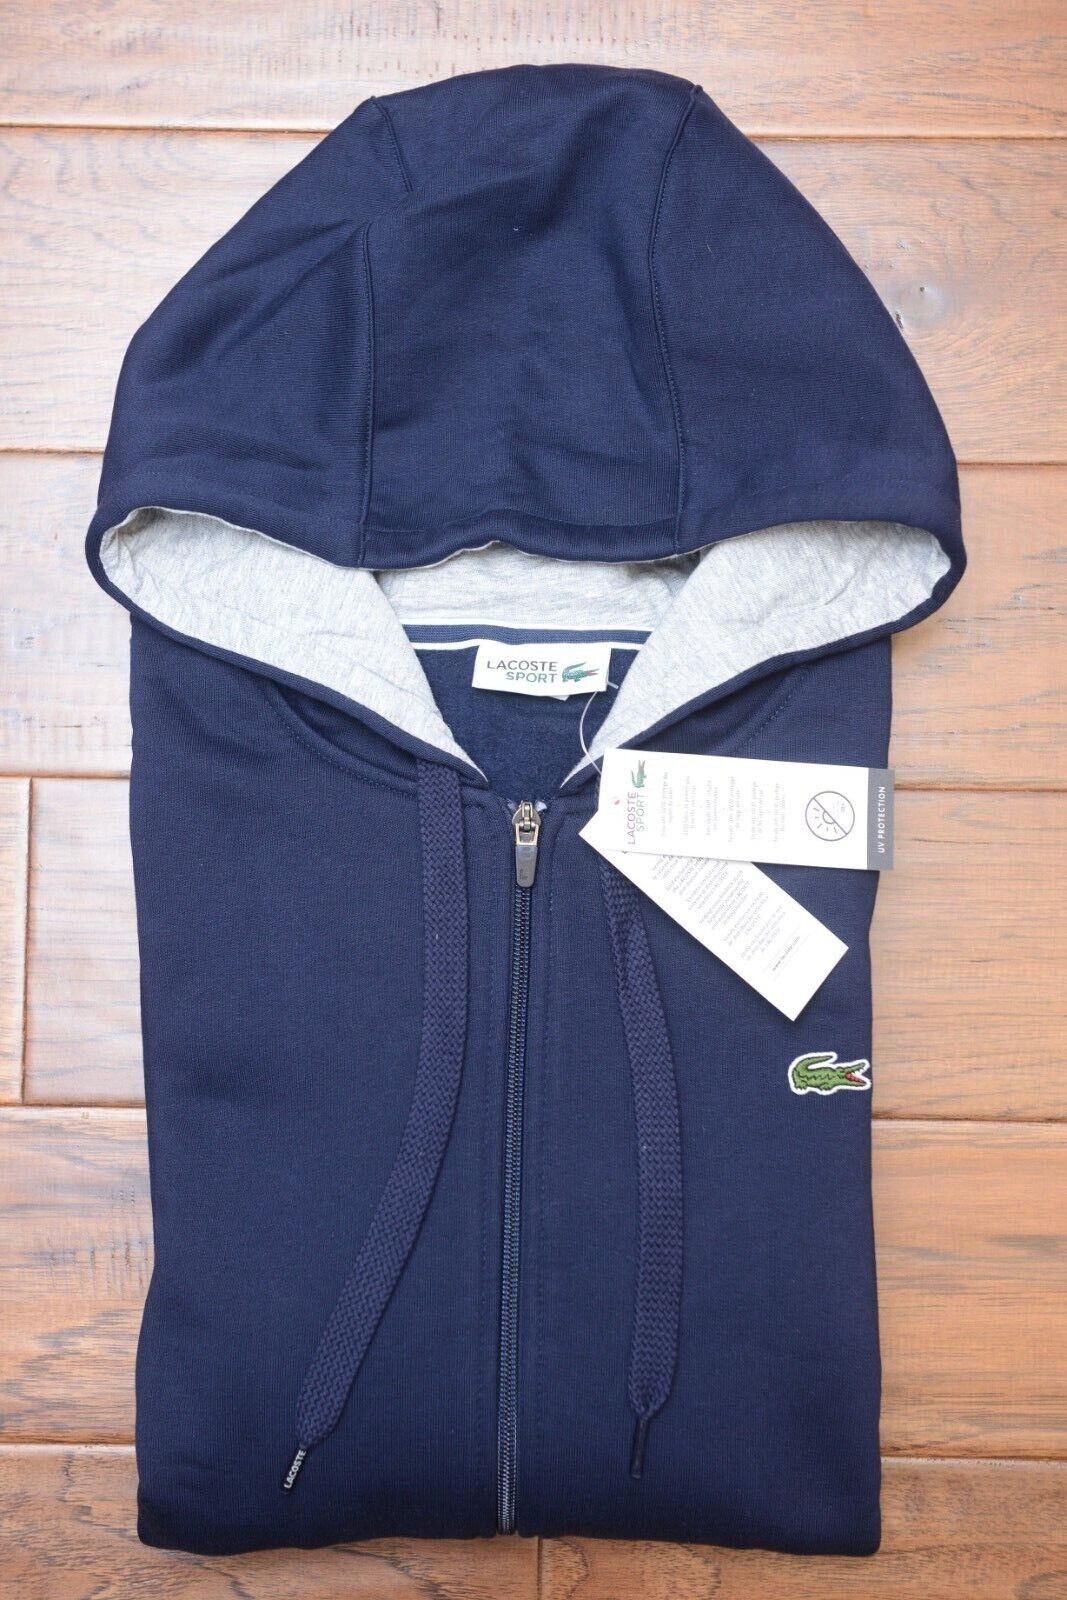 Primary image for Lacoste Sport SH7609 Mens Full Zip Navy Fleece Cotton Hooded Jacket Hoodie 4XL 9